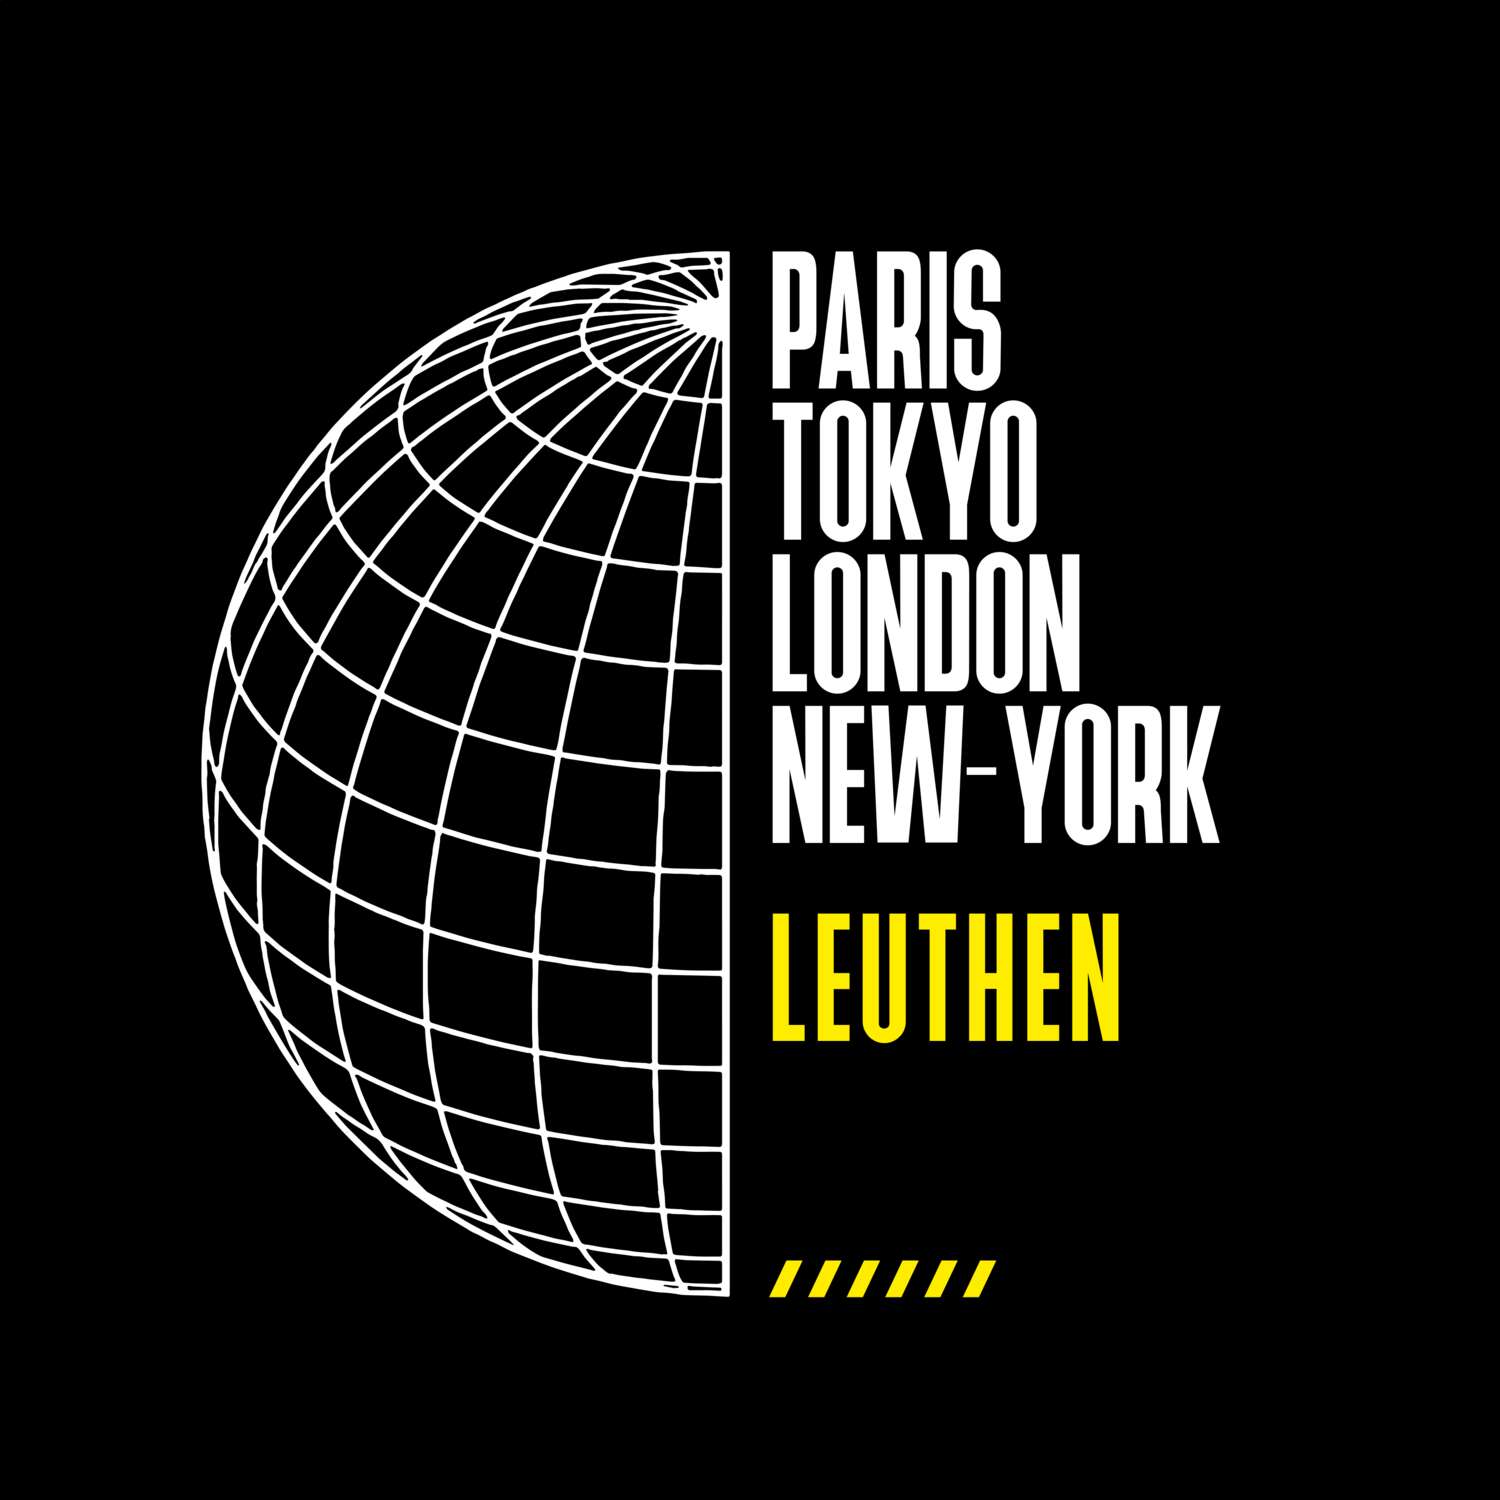 Leuthen T-Shirt »Paris Tokyo London«